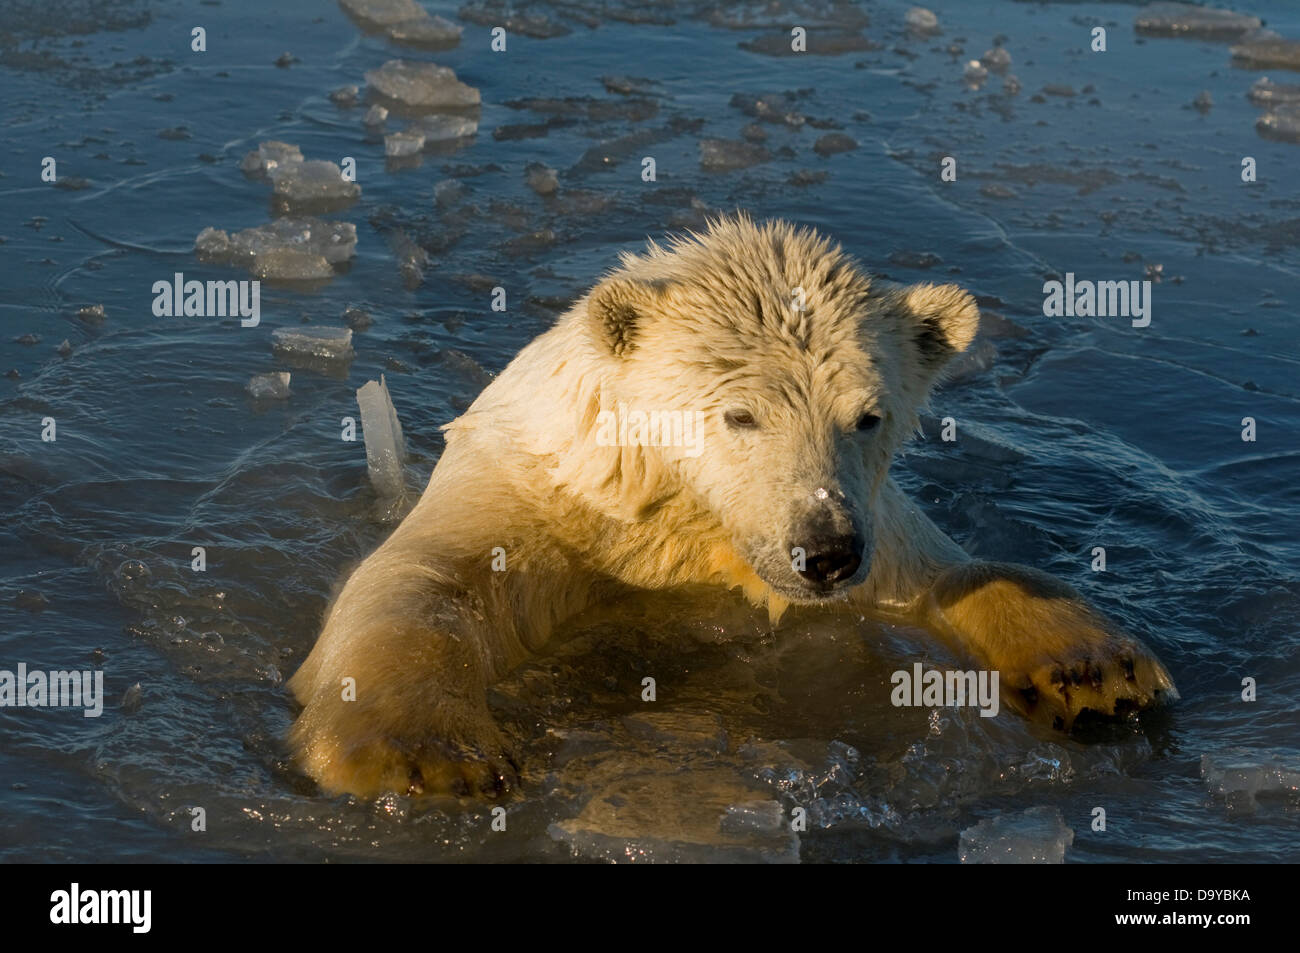 USA, Alaska, Brooks Range, Polar bear (Ursus maritimus) yearling swimming in slushy icy water during fall freeze up Stock Photo